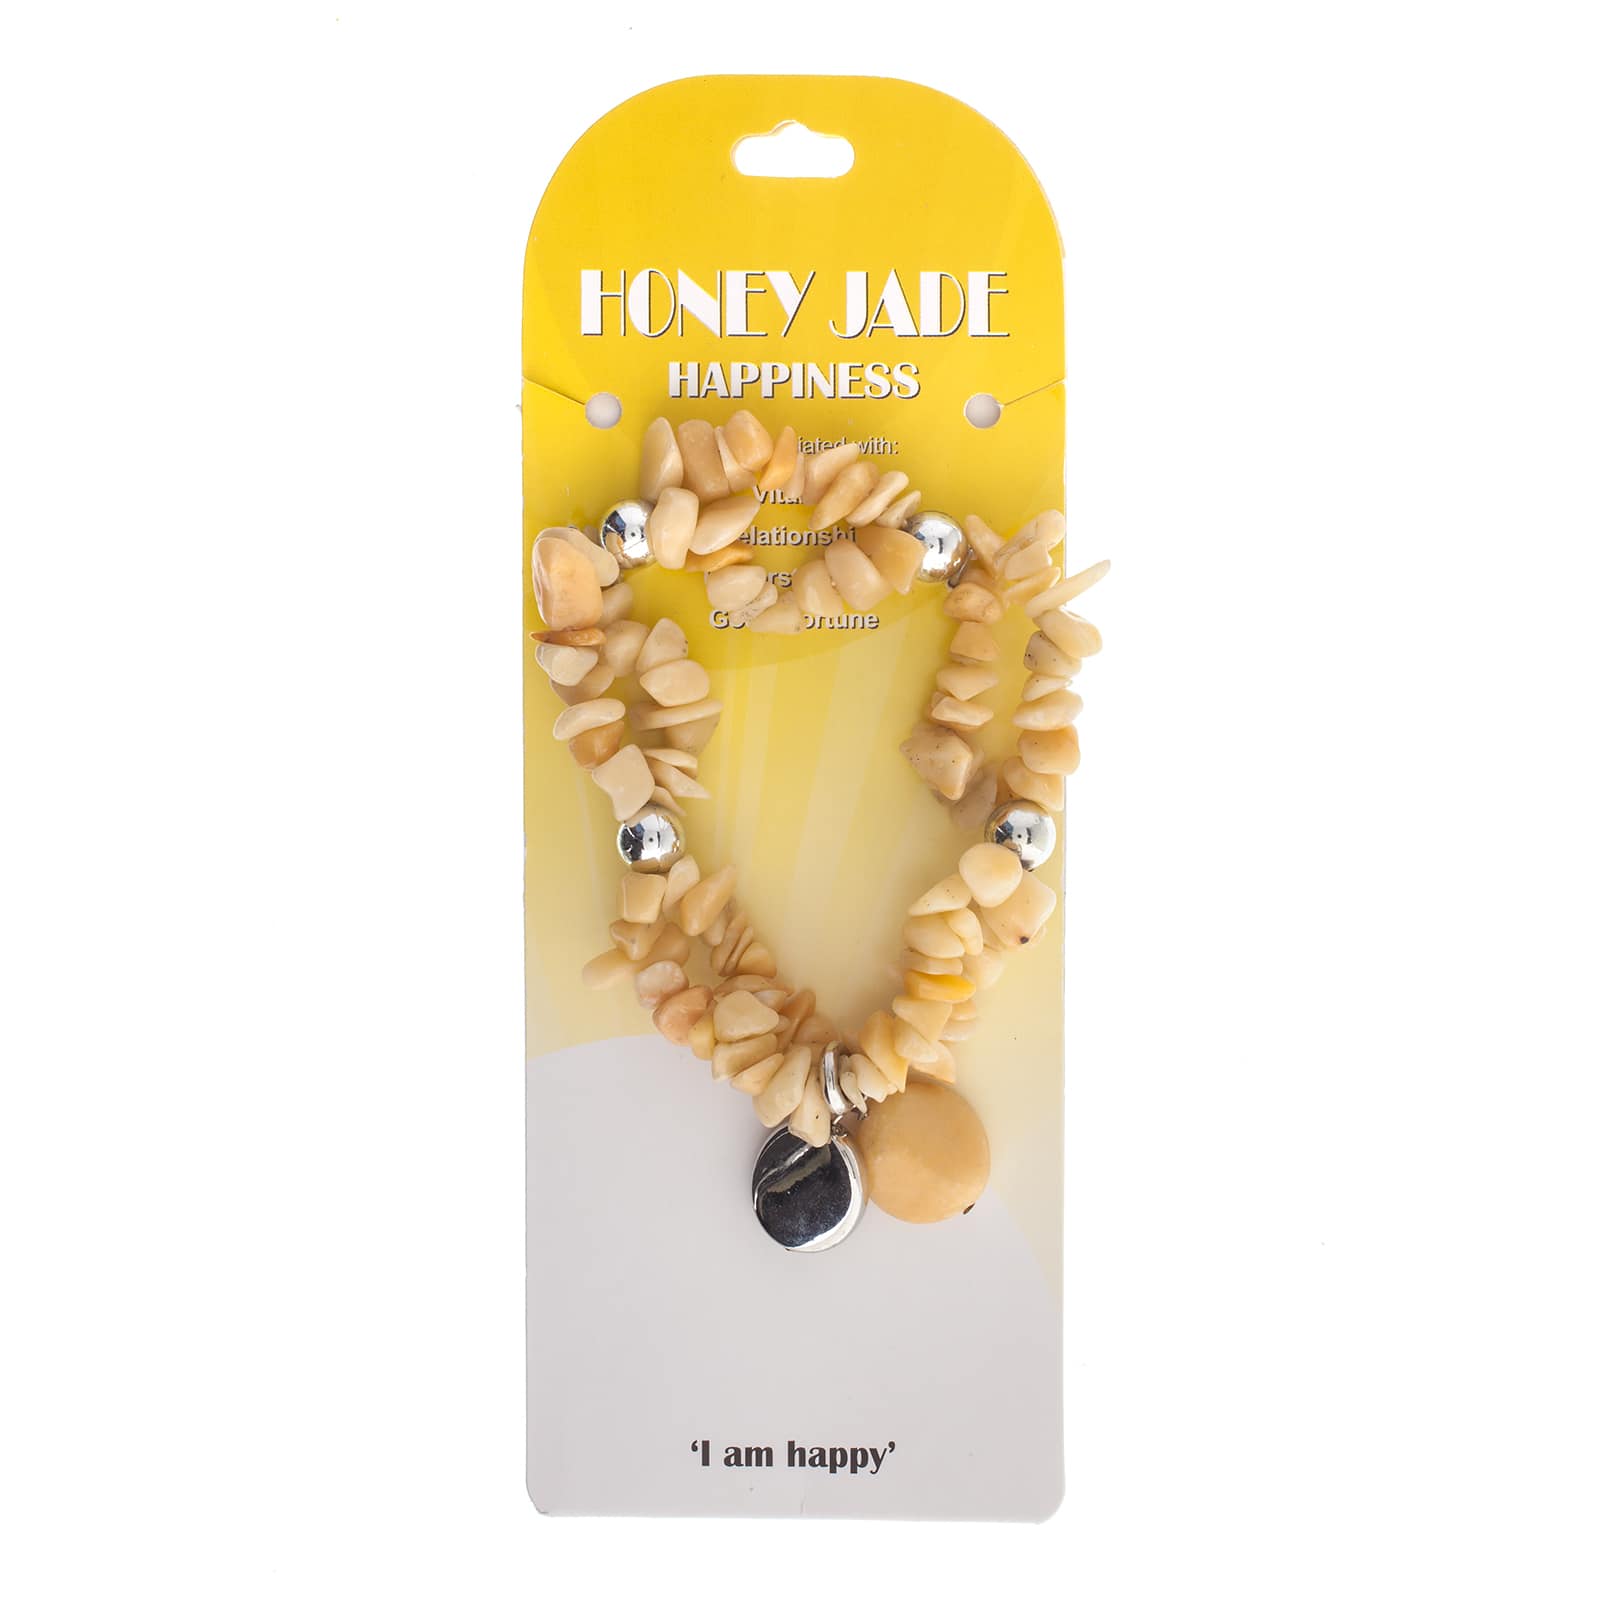 John Bead Honey Jade 2-Strand Happiness Gemstone Charm Bracelet